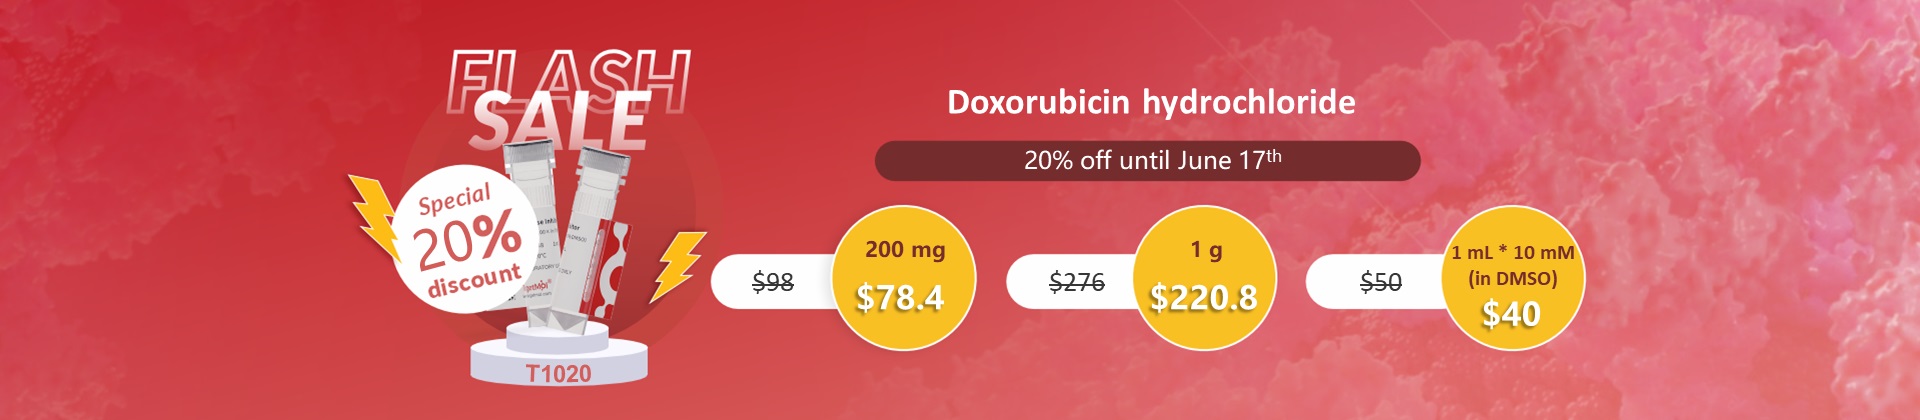 Doxorubicin hydrochloride 80% discount